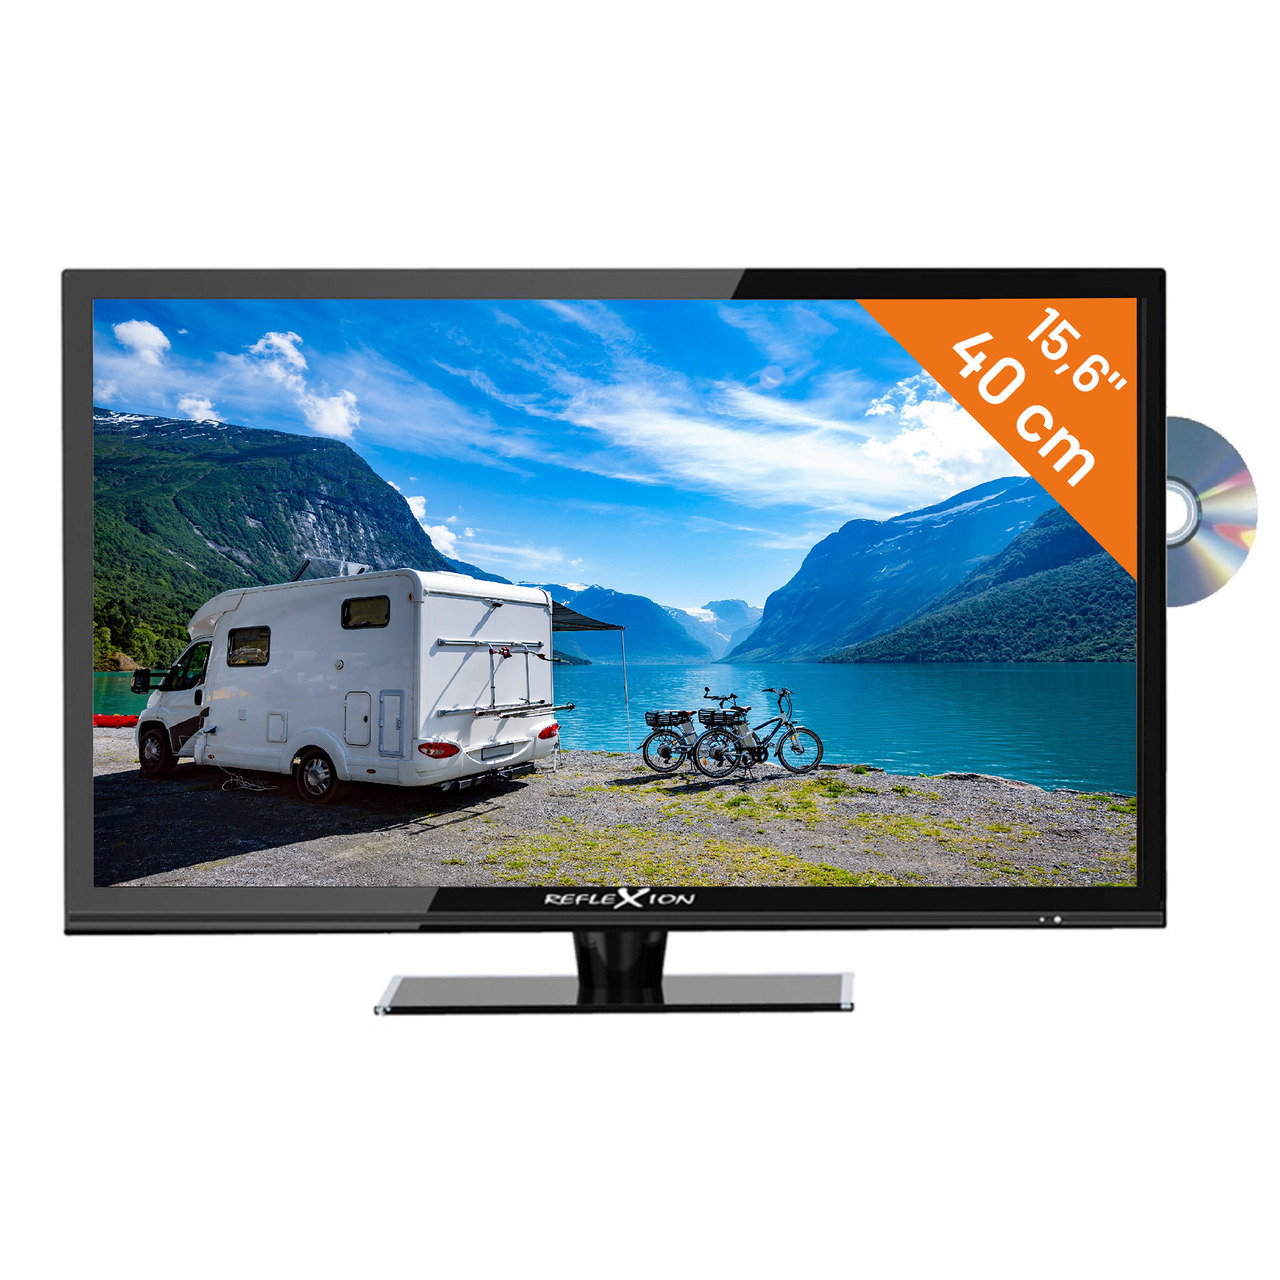 Reflexion 12-24-V-LED-TV LDDW160- 40 cm (15-6)- DVD-Player- DVB-S-S2-C-T-T2- Full-HD- Camping